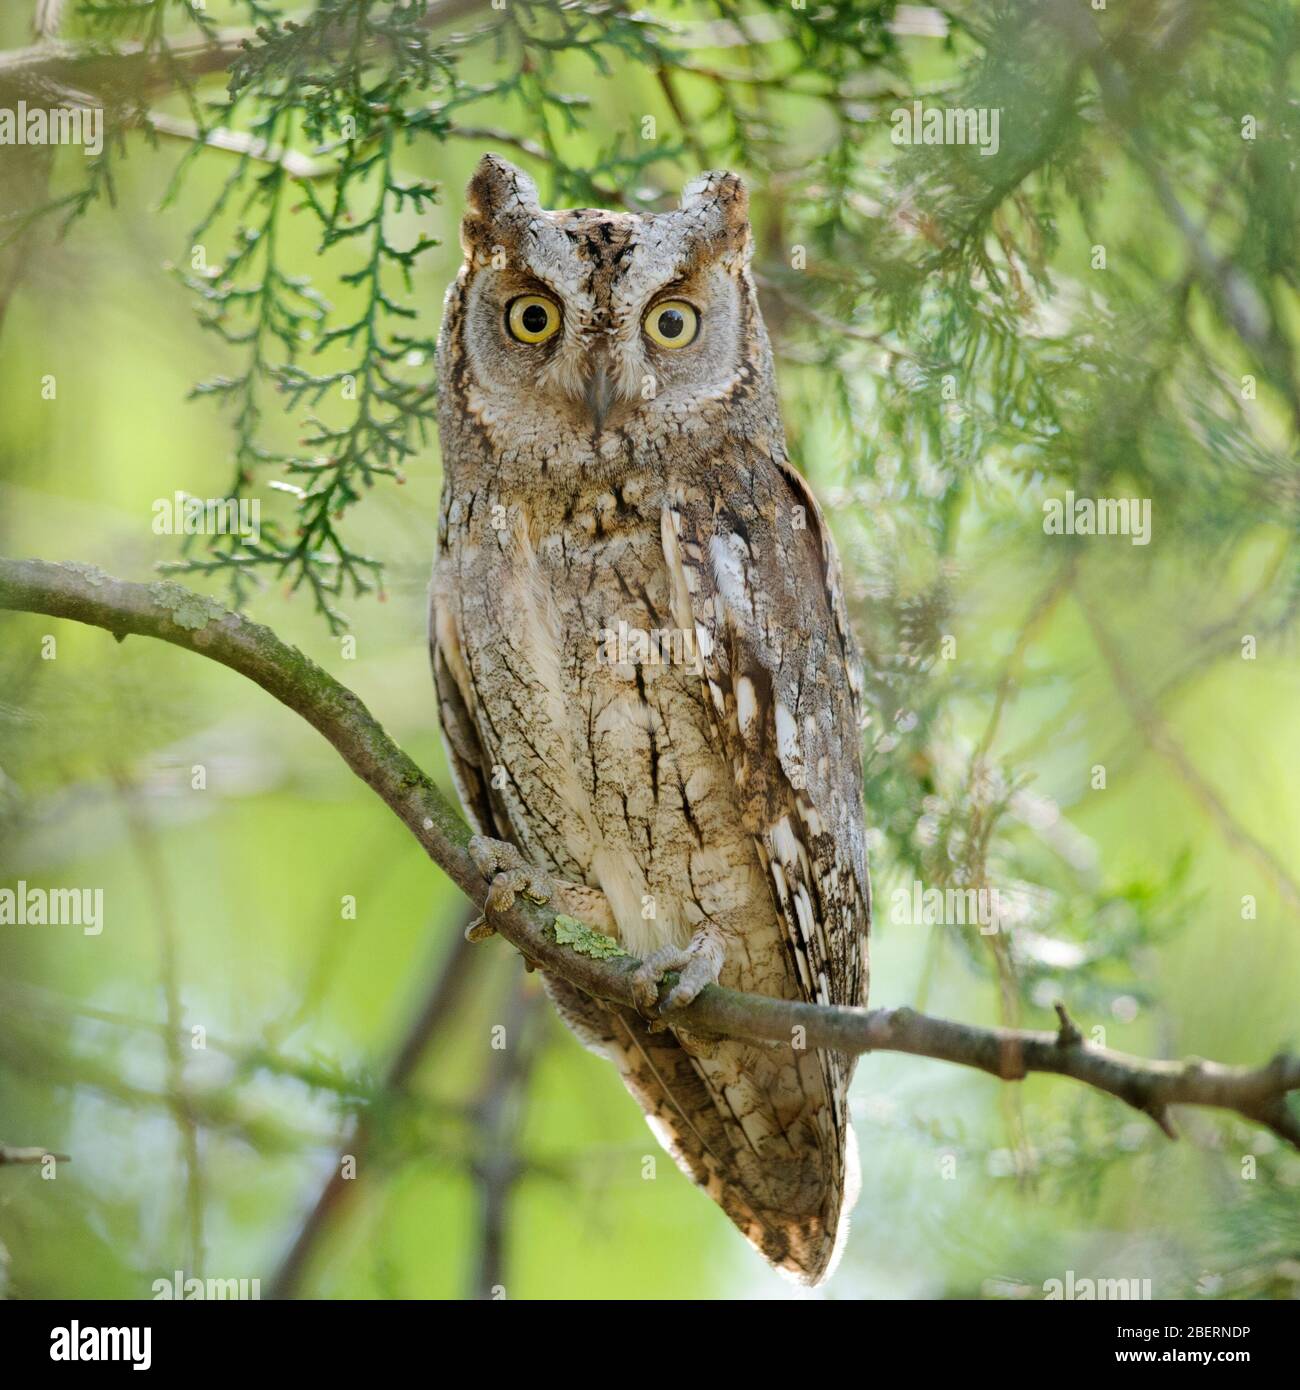 Scops owl sitting in a tree on a beautiful green background. Otus scops. Stock Photo